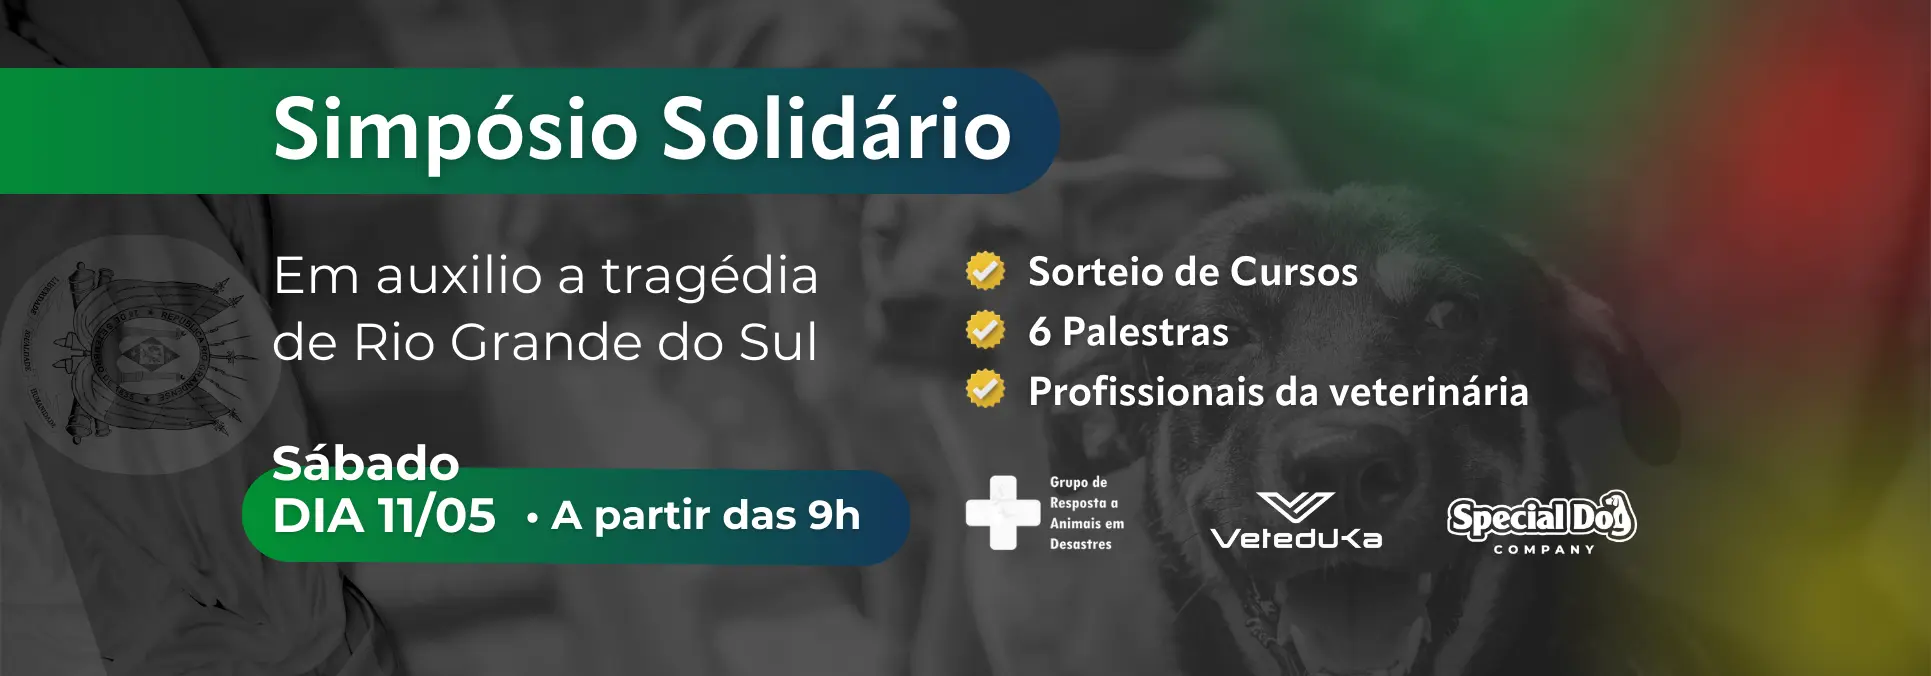 Banner site - Simpósio Solidário